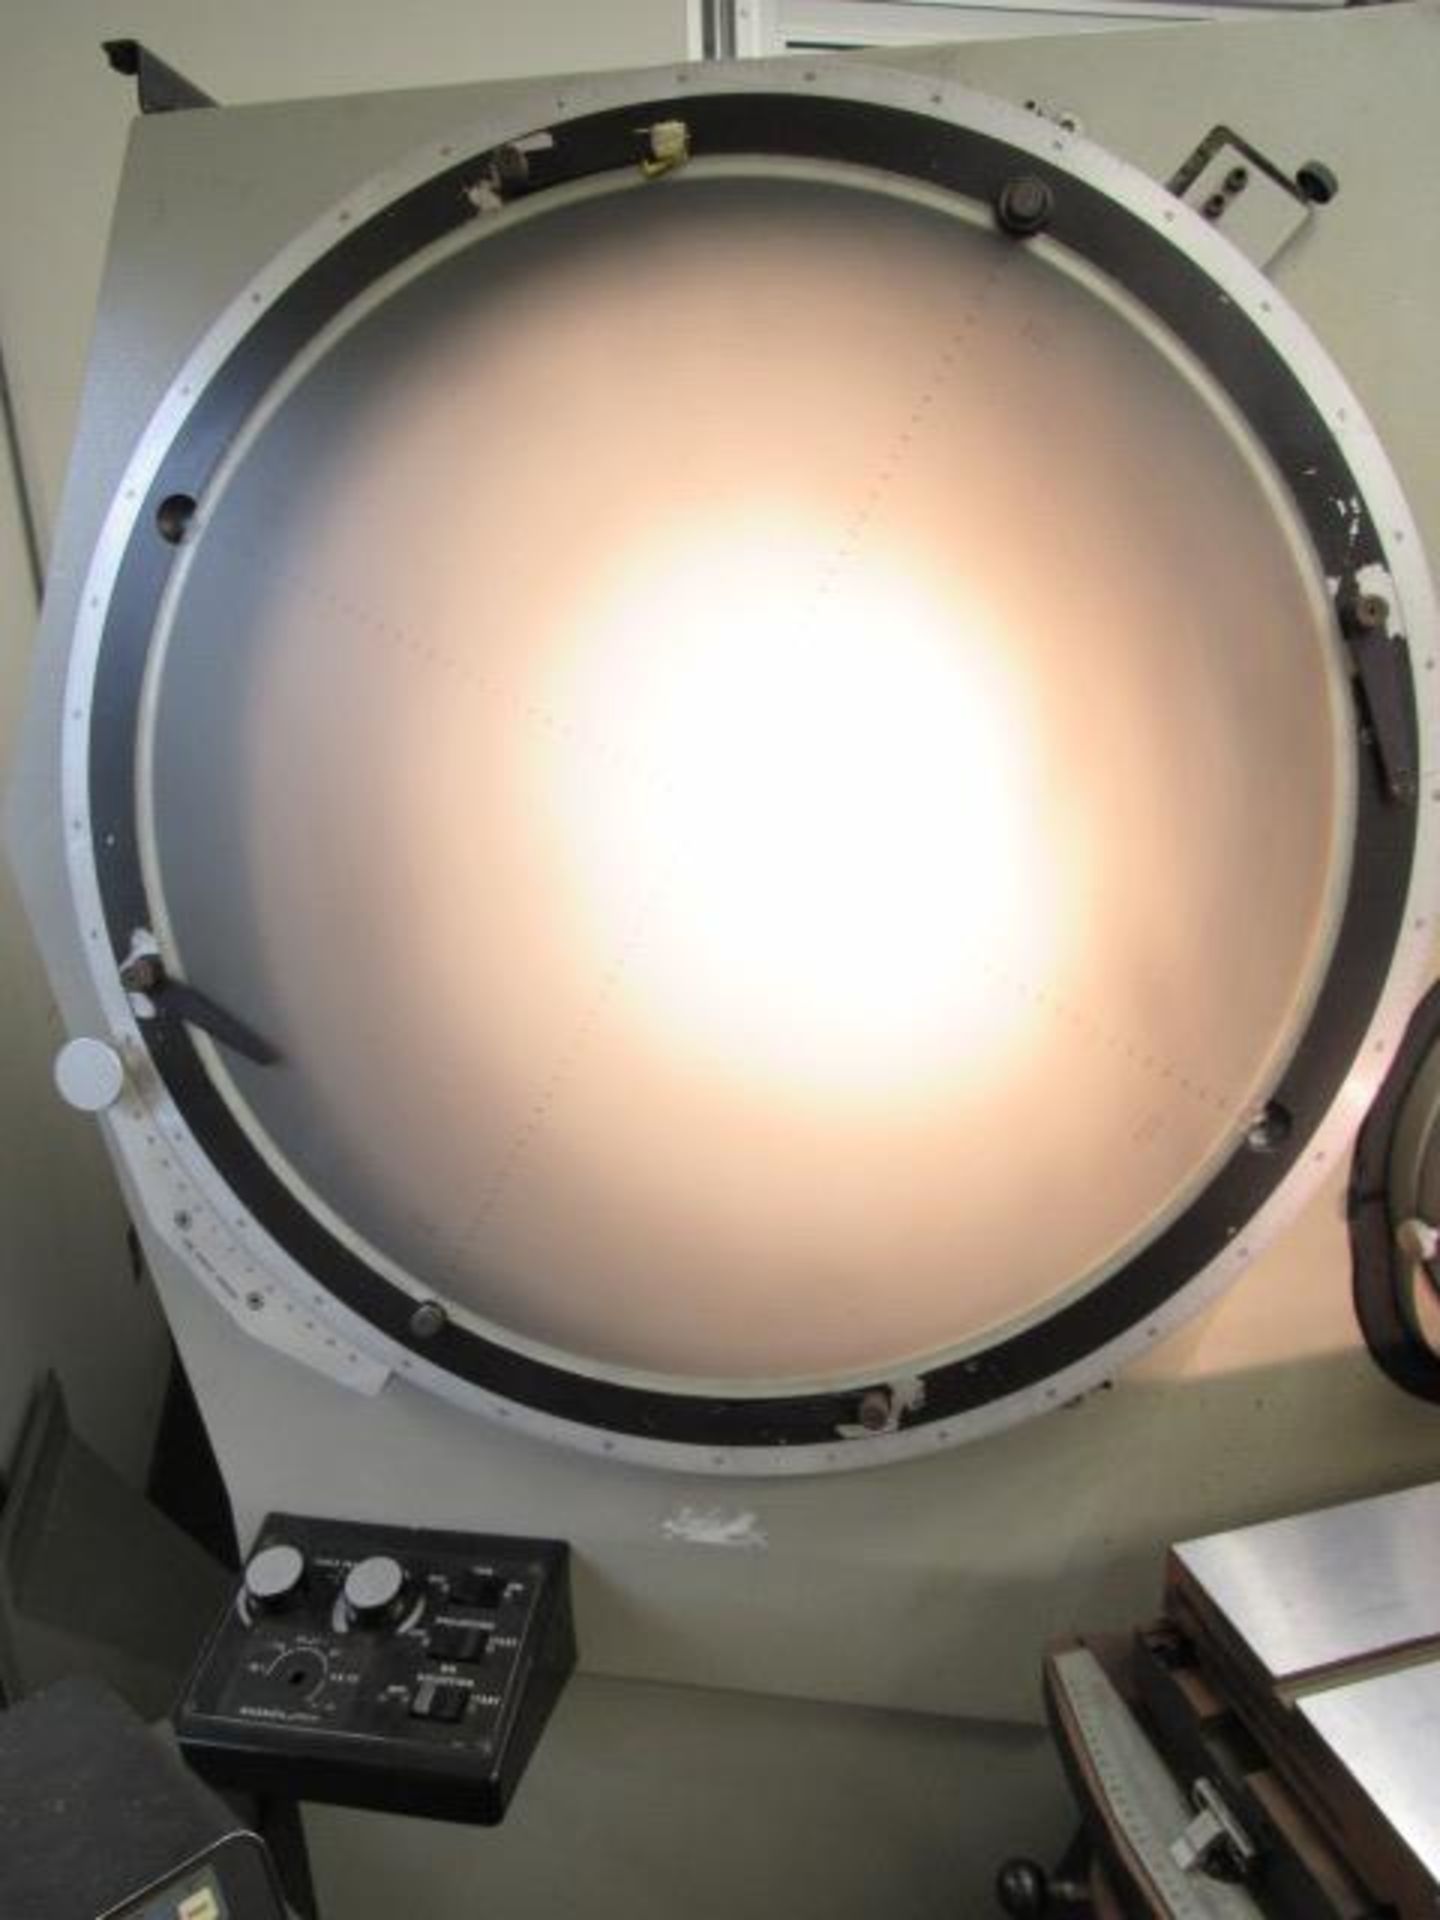 J&L C-522174 Optical Comparator - Image 5 of 6